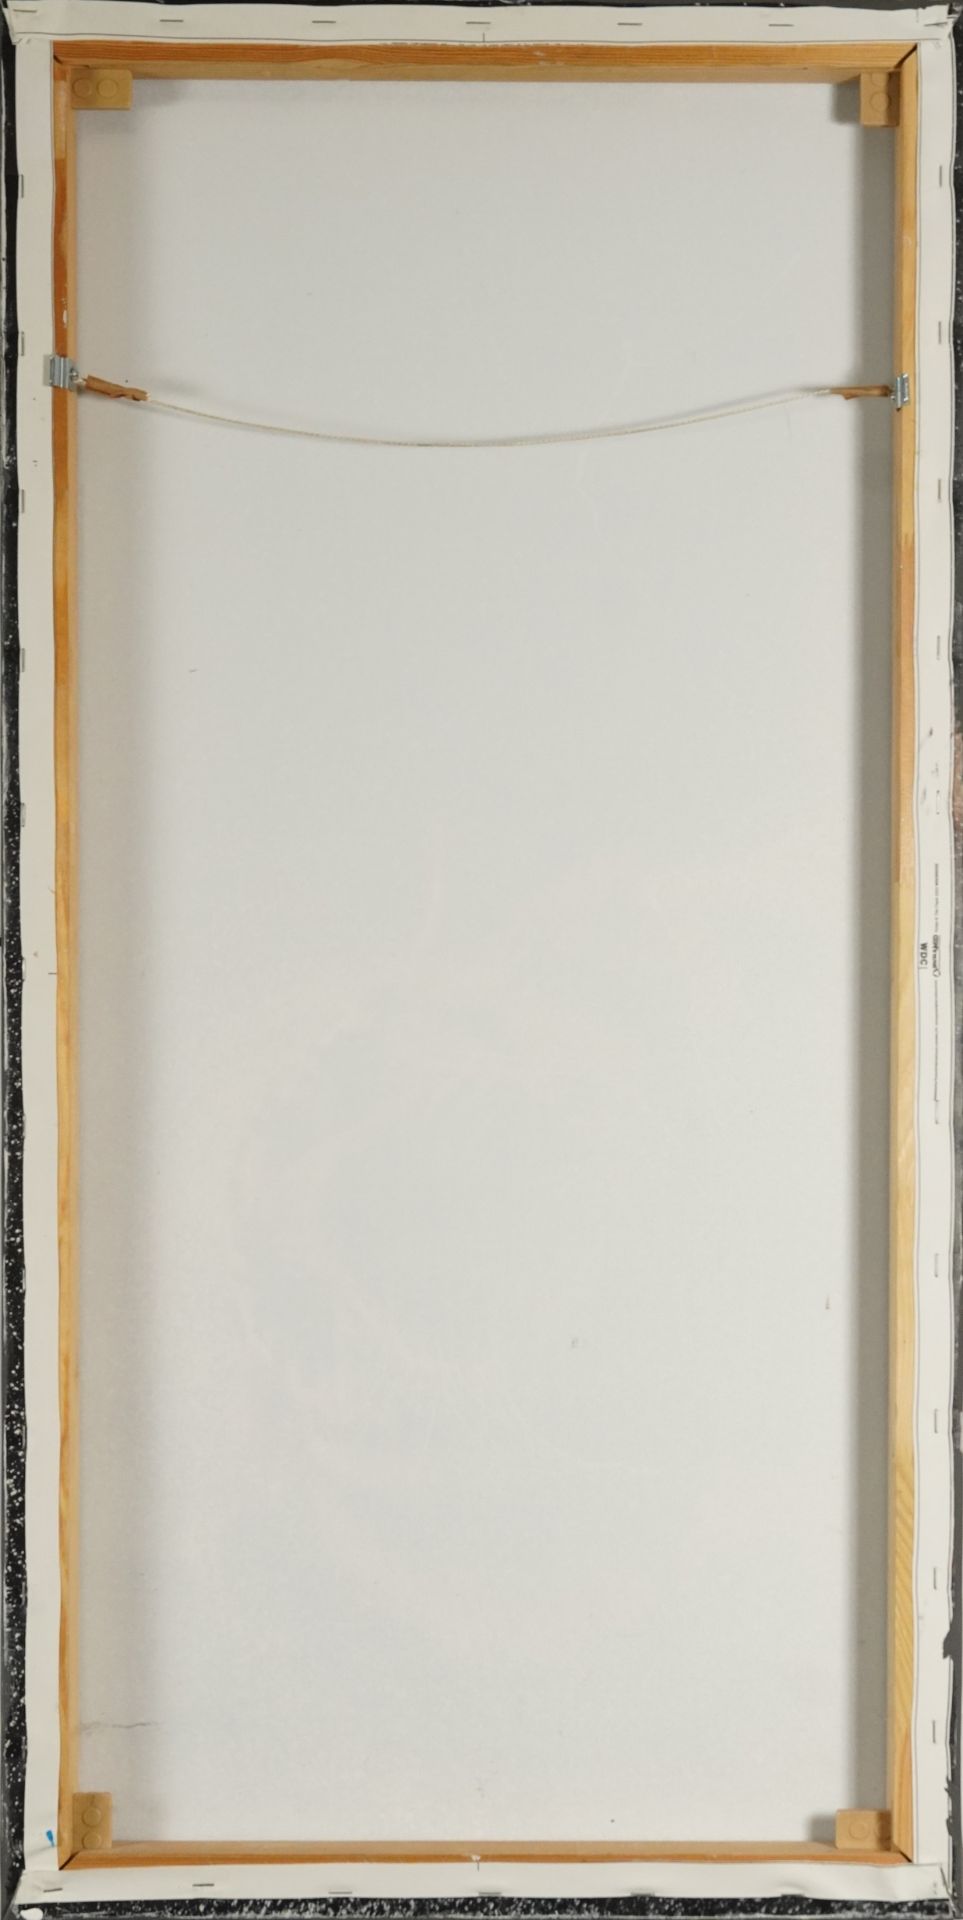 Clive Fredriksson - Jimi Hendrix, contemporary oil on canvas, unframed, 100.5cm x 50.5cm - Image 3 of 3